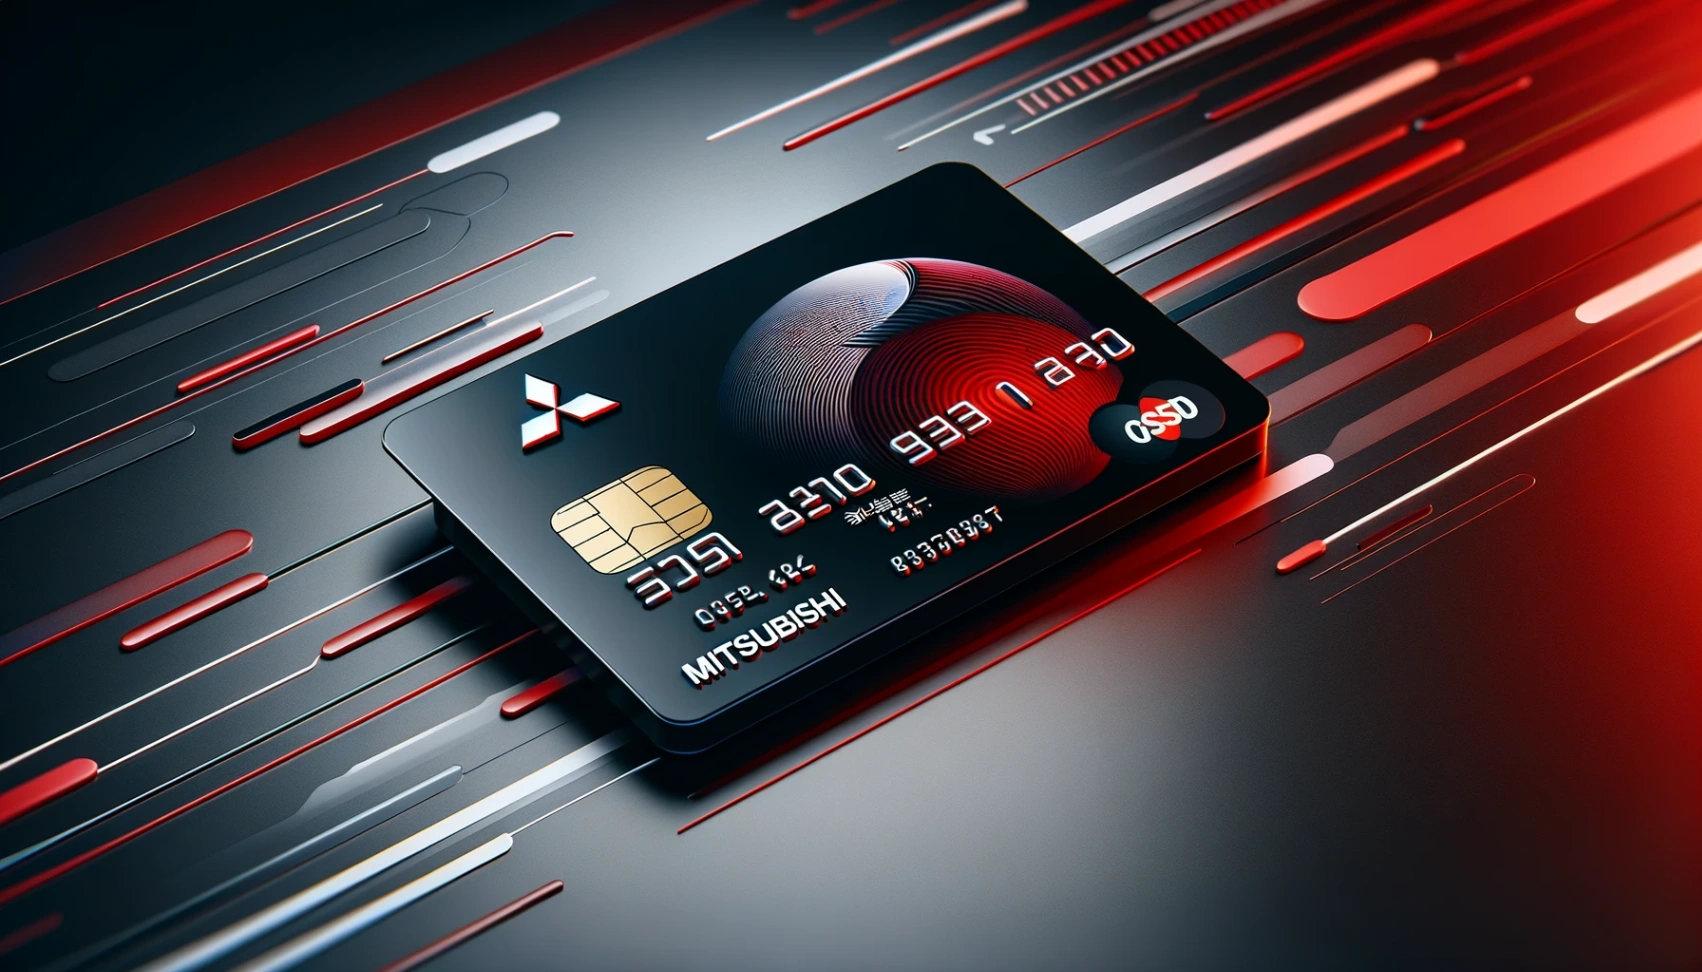 Mitsubishi UFG Nicos Credit Card - How To Apply